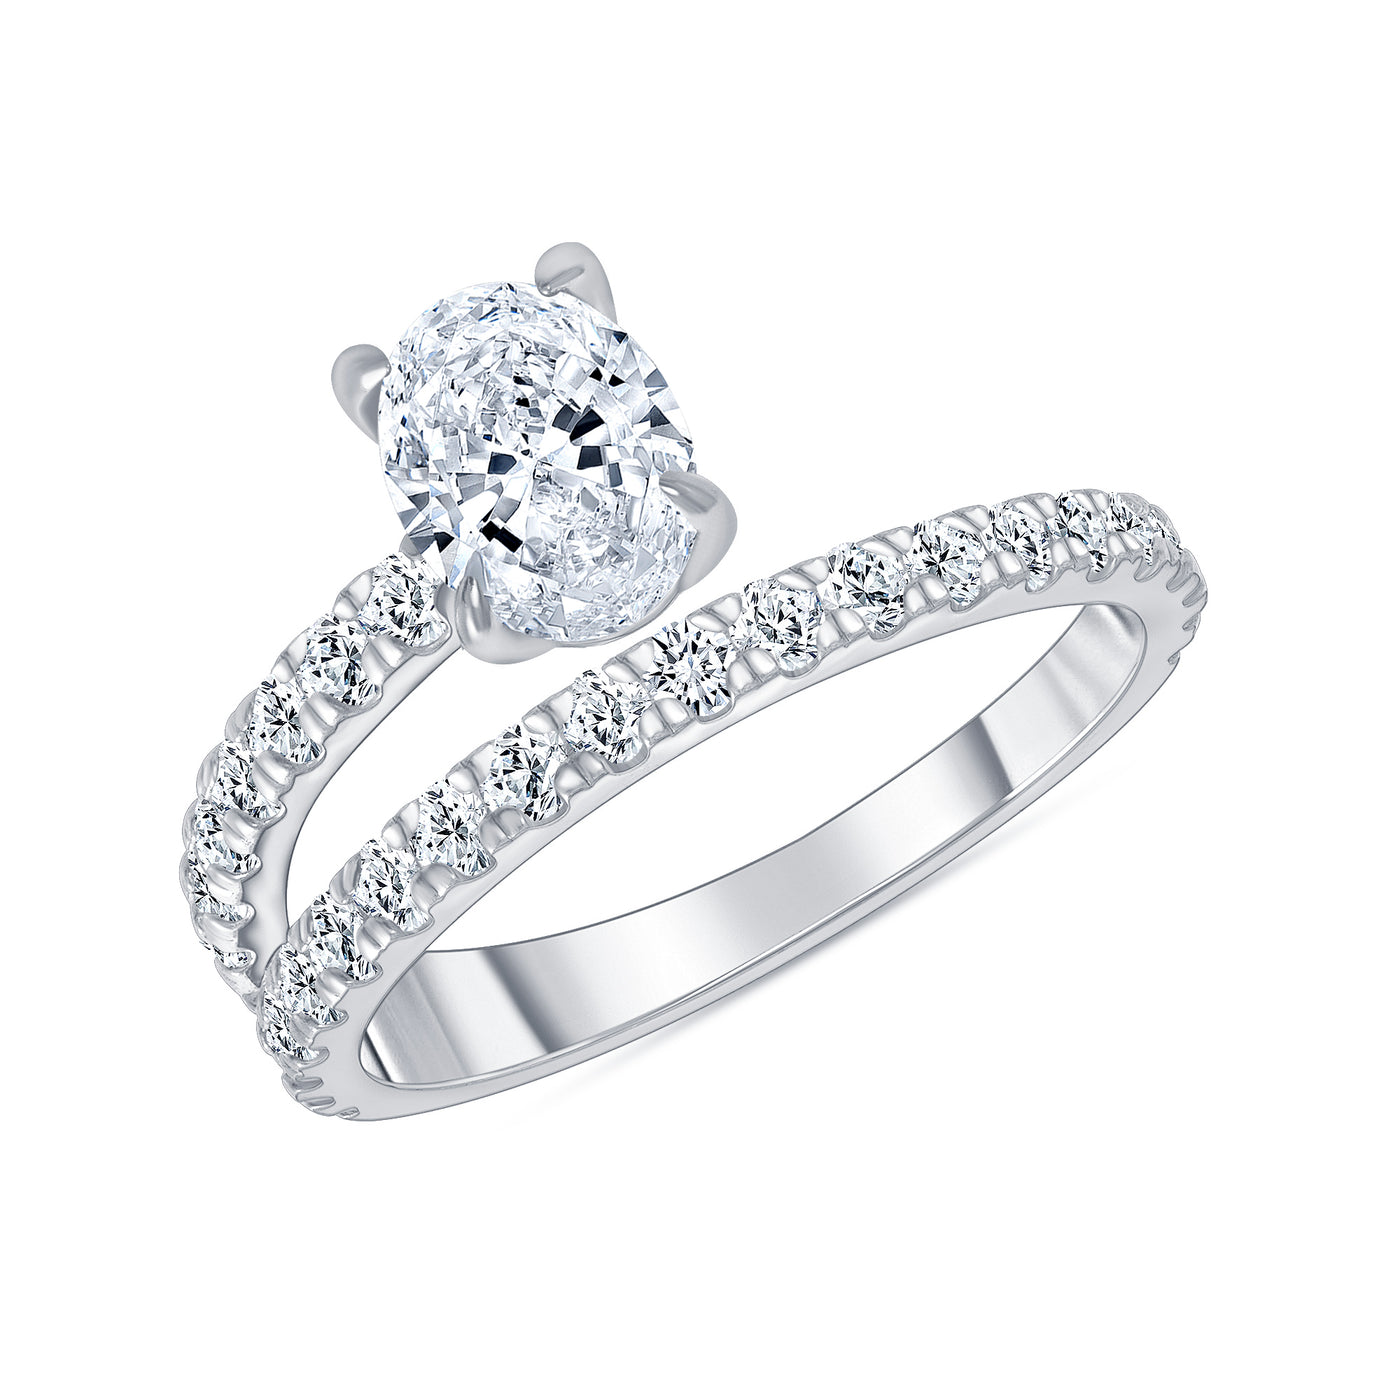 0.75 Carat Oval Cut Diamond Engagement Ring Design (0.50 Carat Center Diamond)